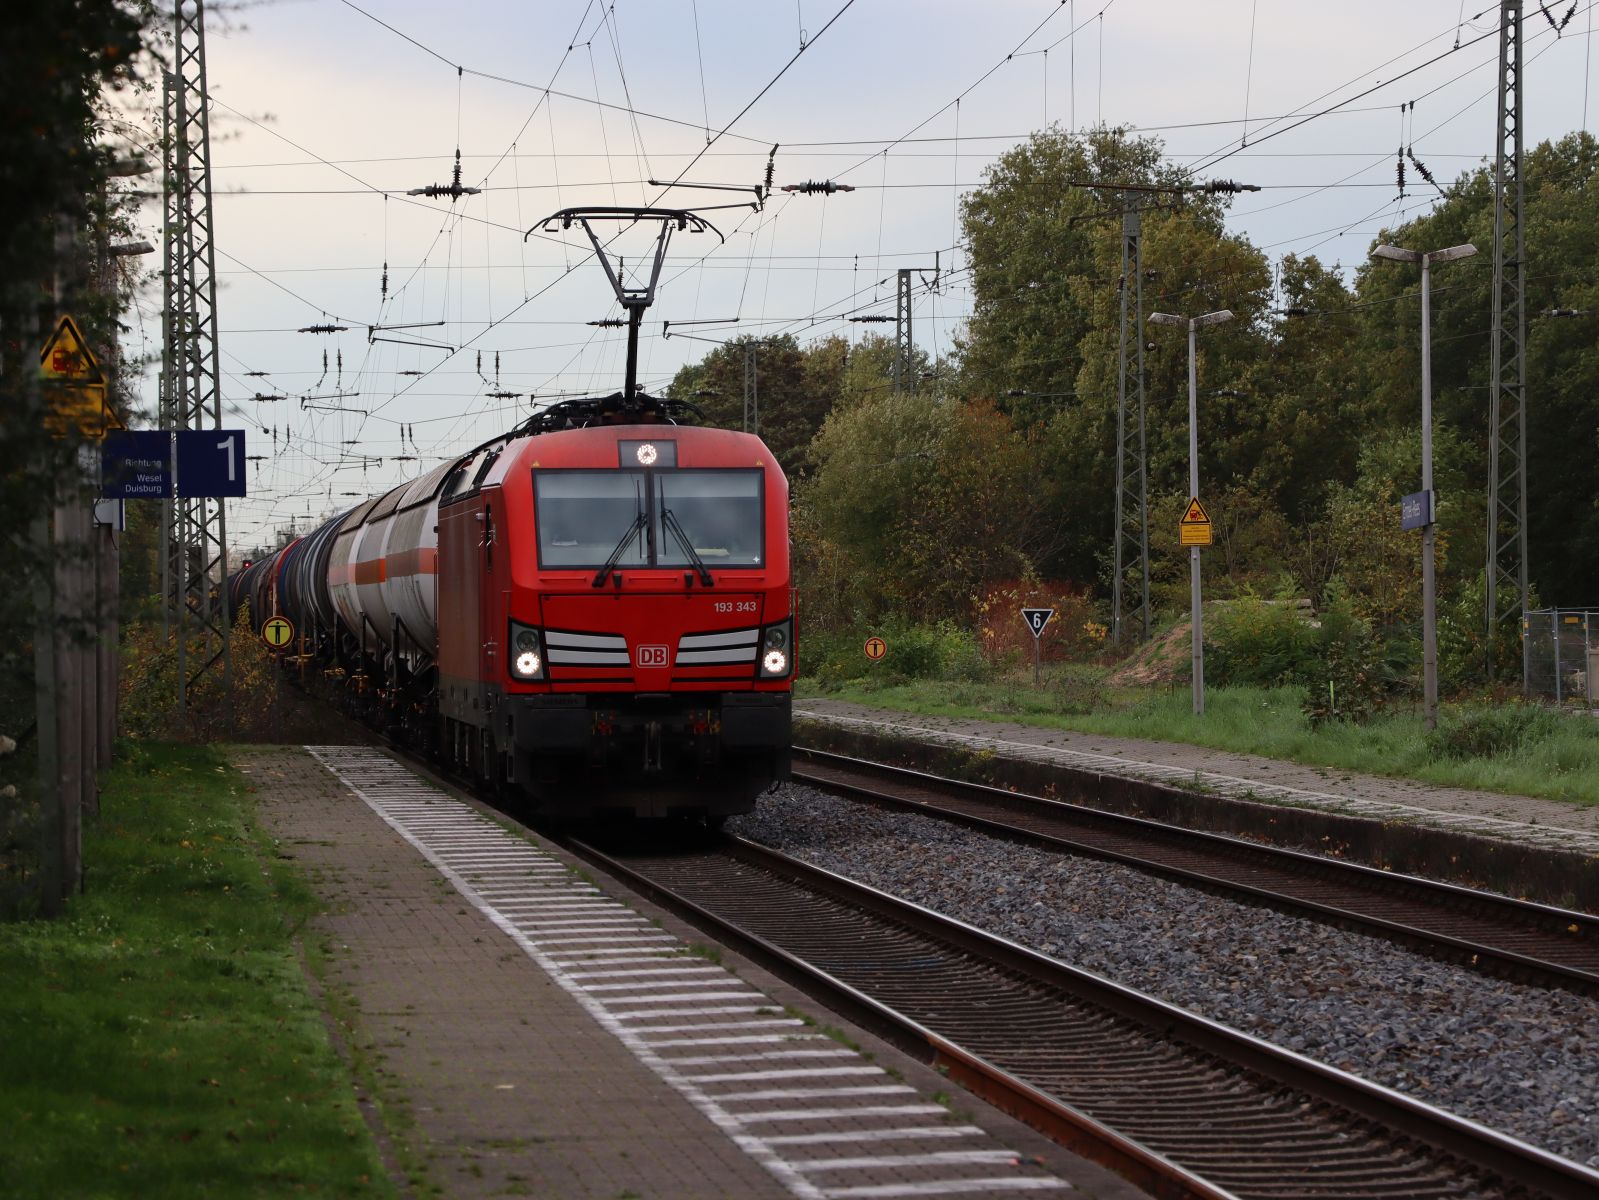 DB Cargo Vectron Lokomotive 193 343-1 (91 80 6193 343-1 D-DB) Durchfahrt Gleis 1 Bahnhof Empel-Rees 03-11-2022.

DB Cargo Vectron locomotief 193 343-1 (91 80 6193 343-1 D-DB) doorkomst spoor 1 station Empel-Rees 03-11-2022.